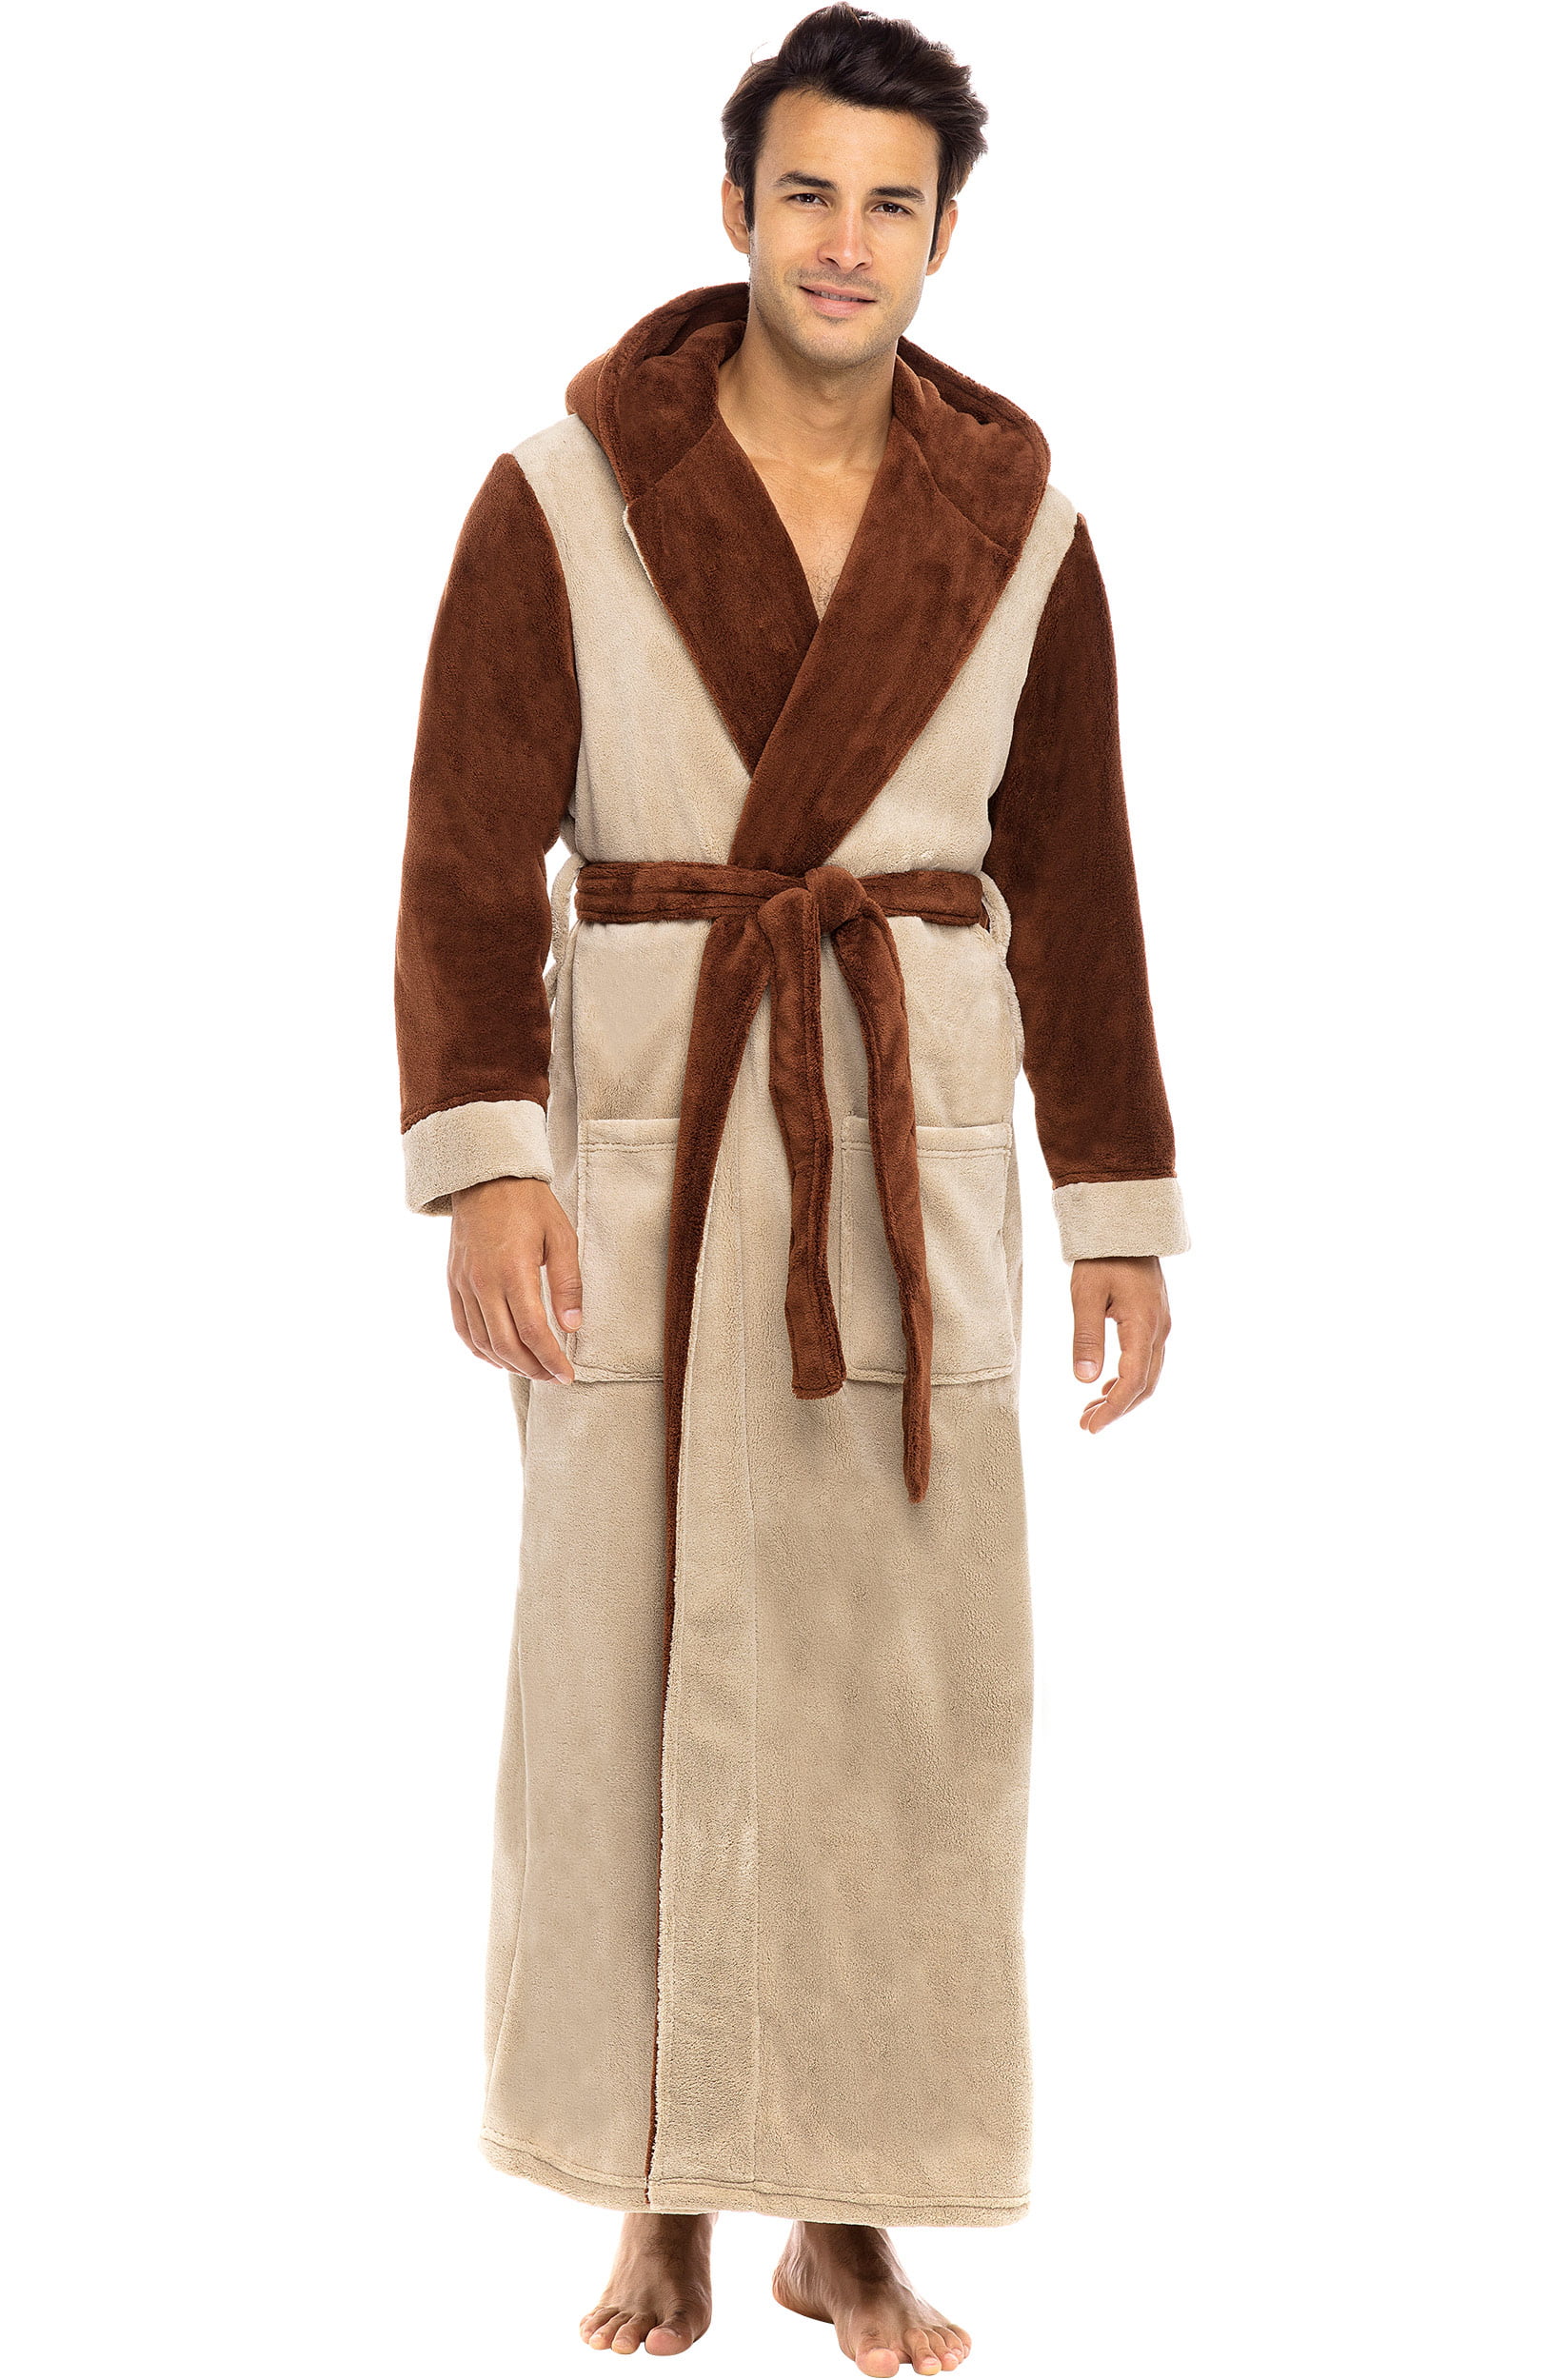 Alexander Del Rossa Men's Warm Fleece Robe with Hood Big and Tall Contrast Bathrobe 